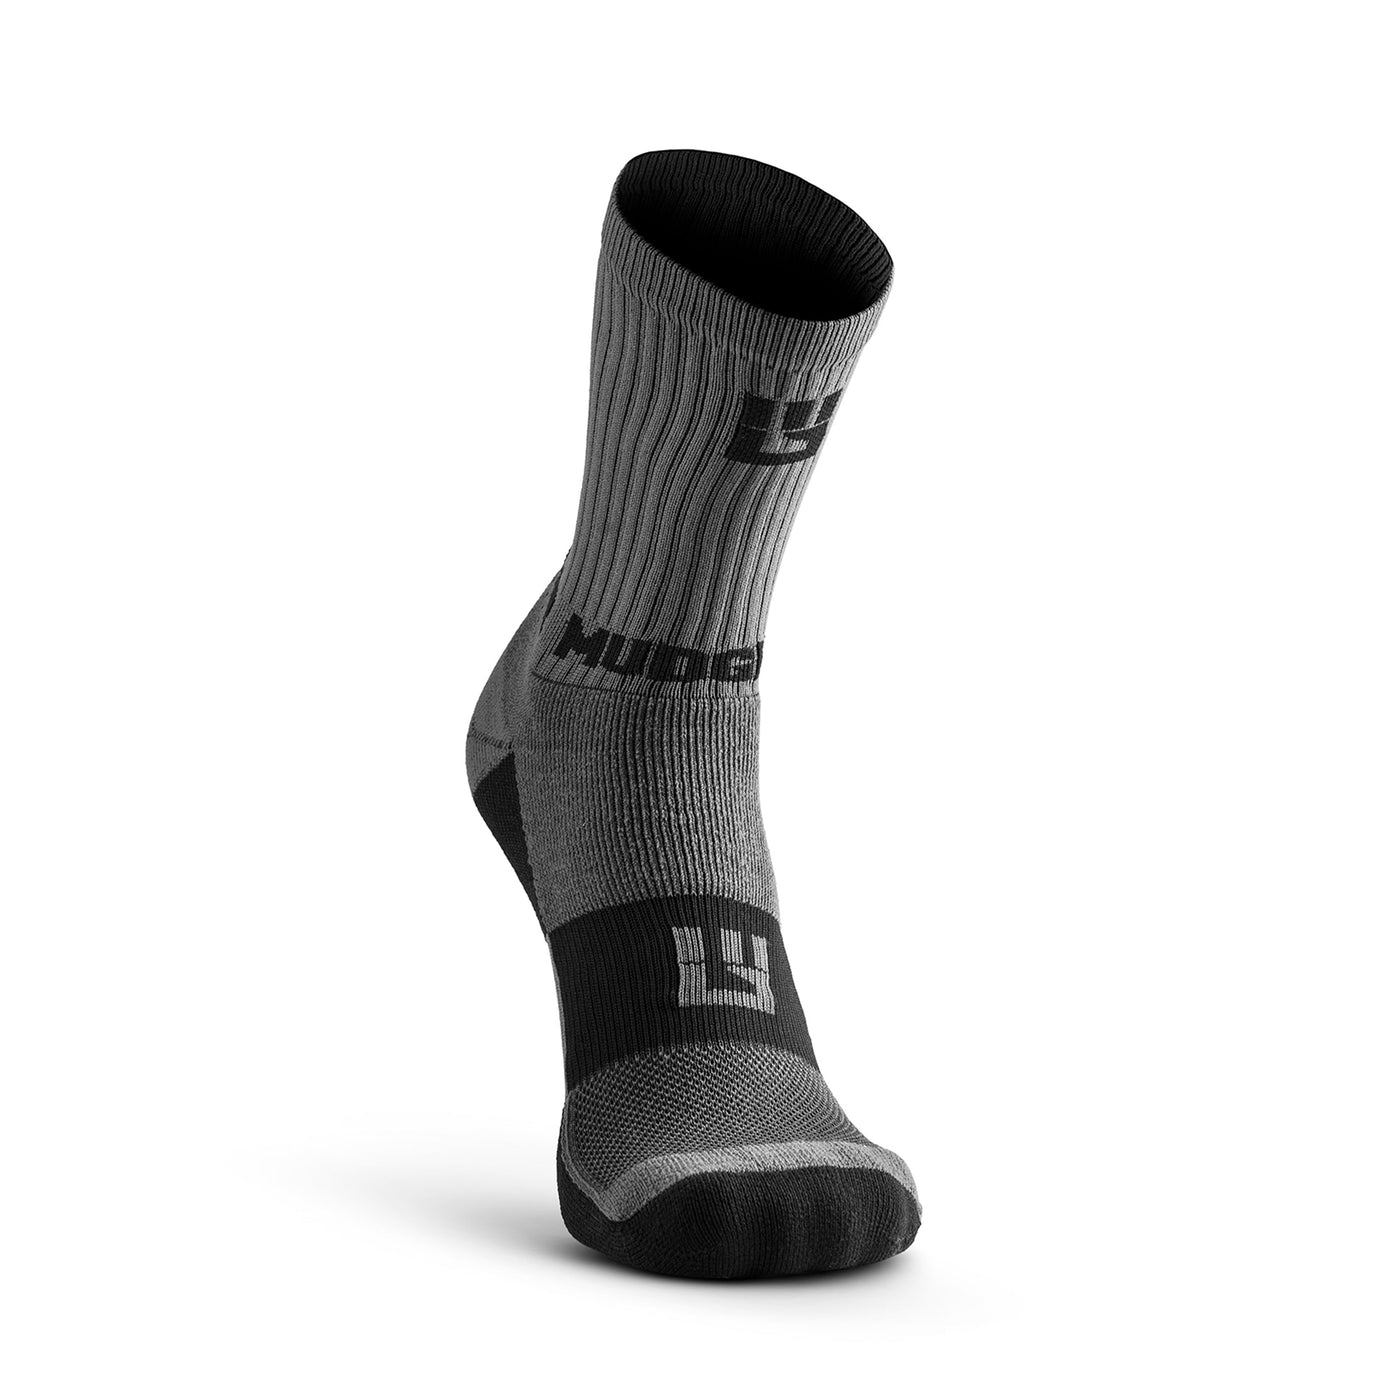 Hiking/Trekking Sock - Gray/Black (2 Pair Pack)